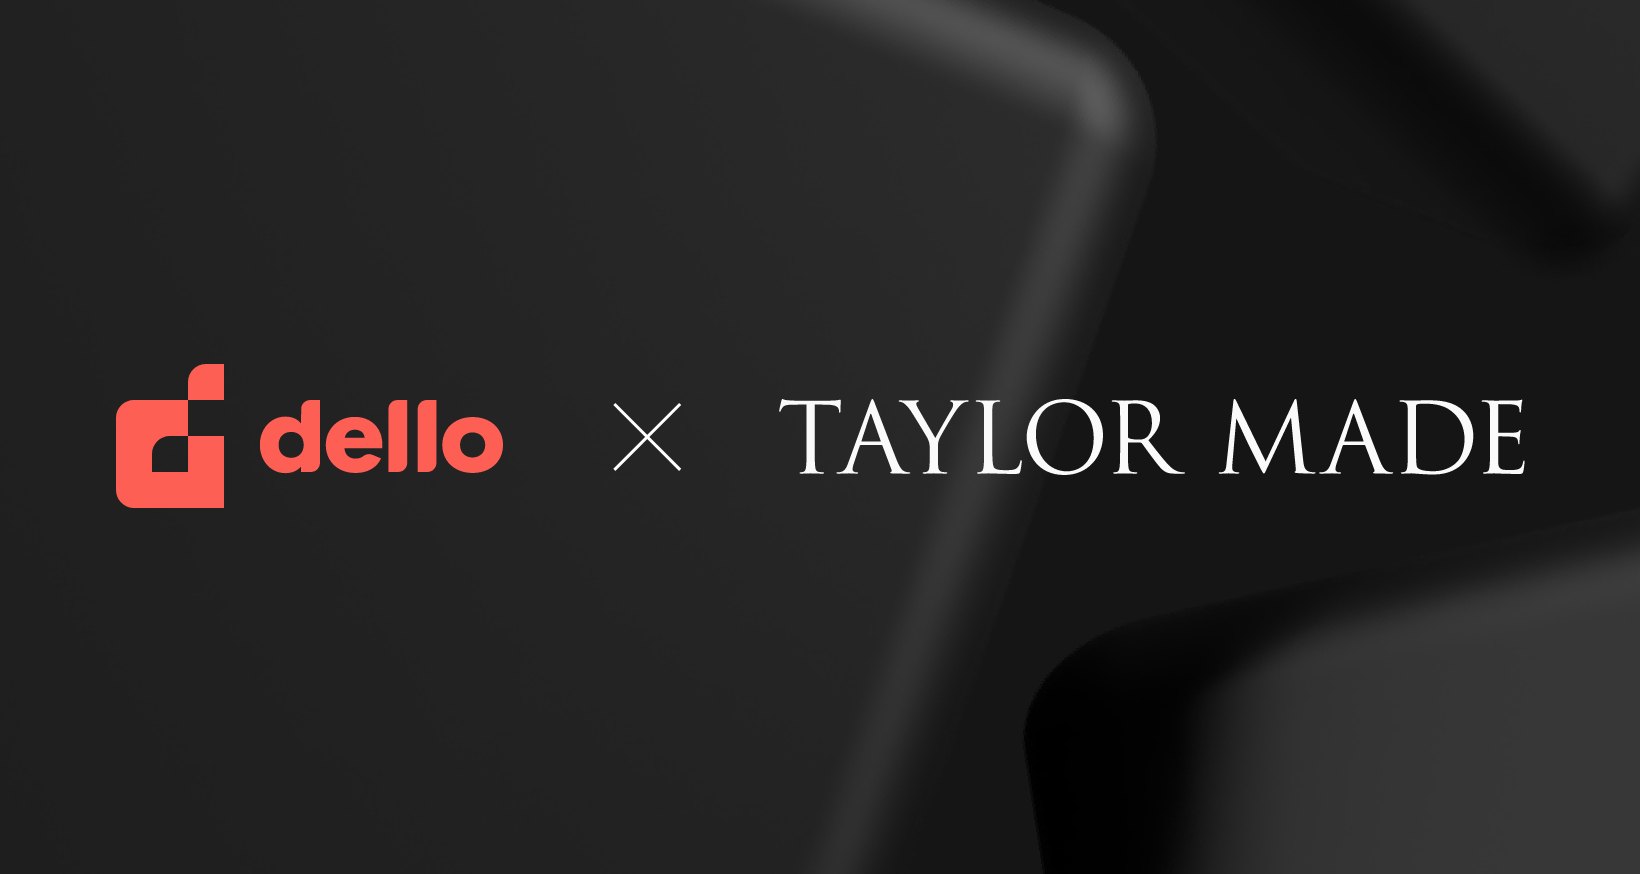 Dello and Taylor Made logos.